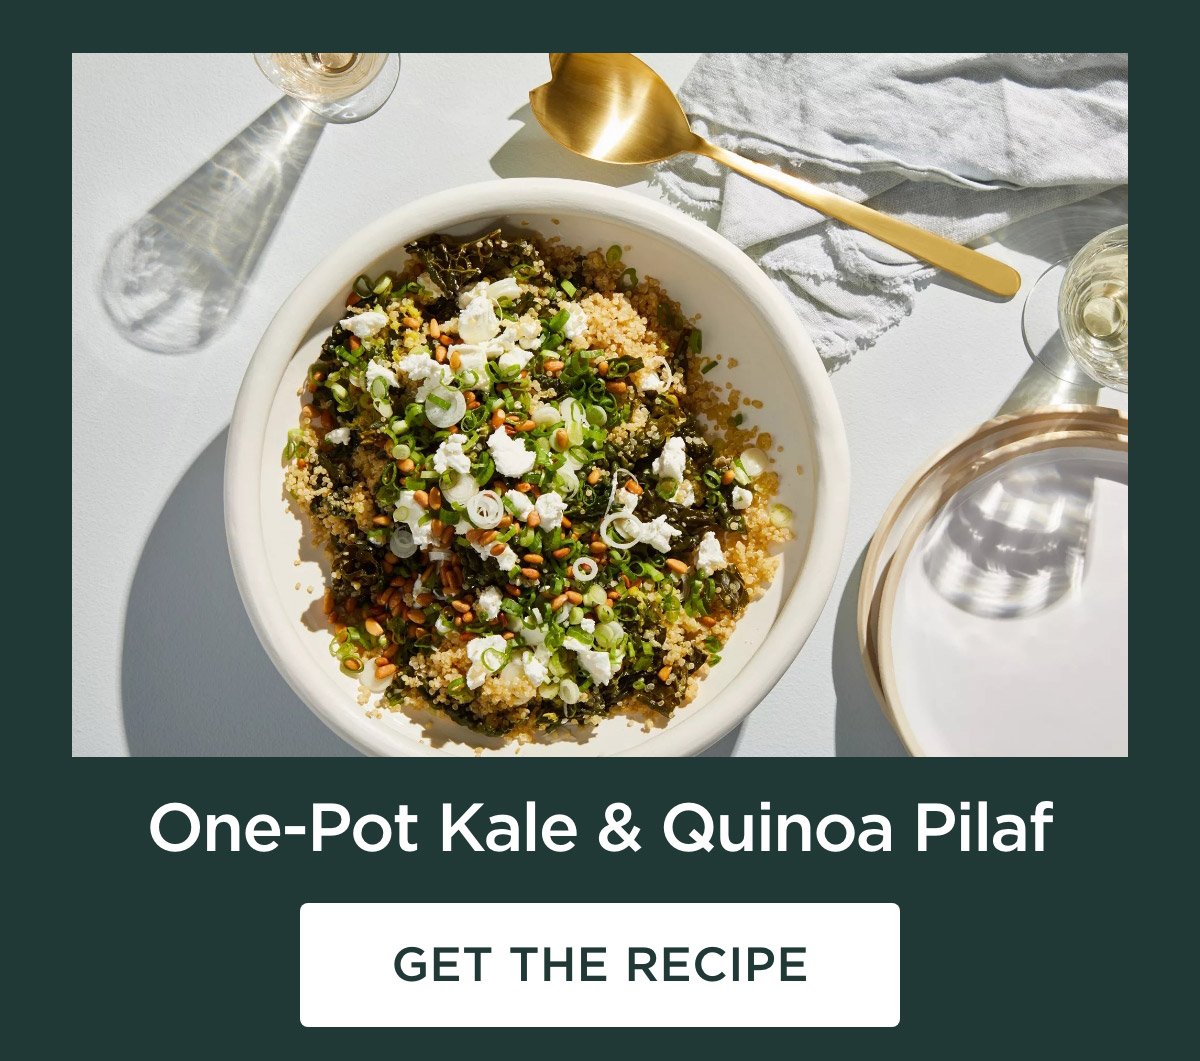 One-Pot Kale & Quinoa Pilaf